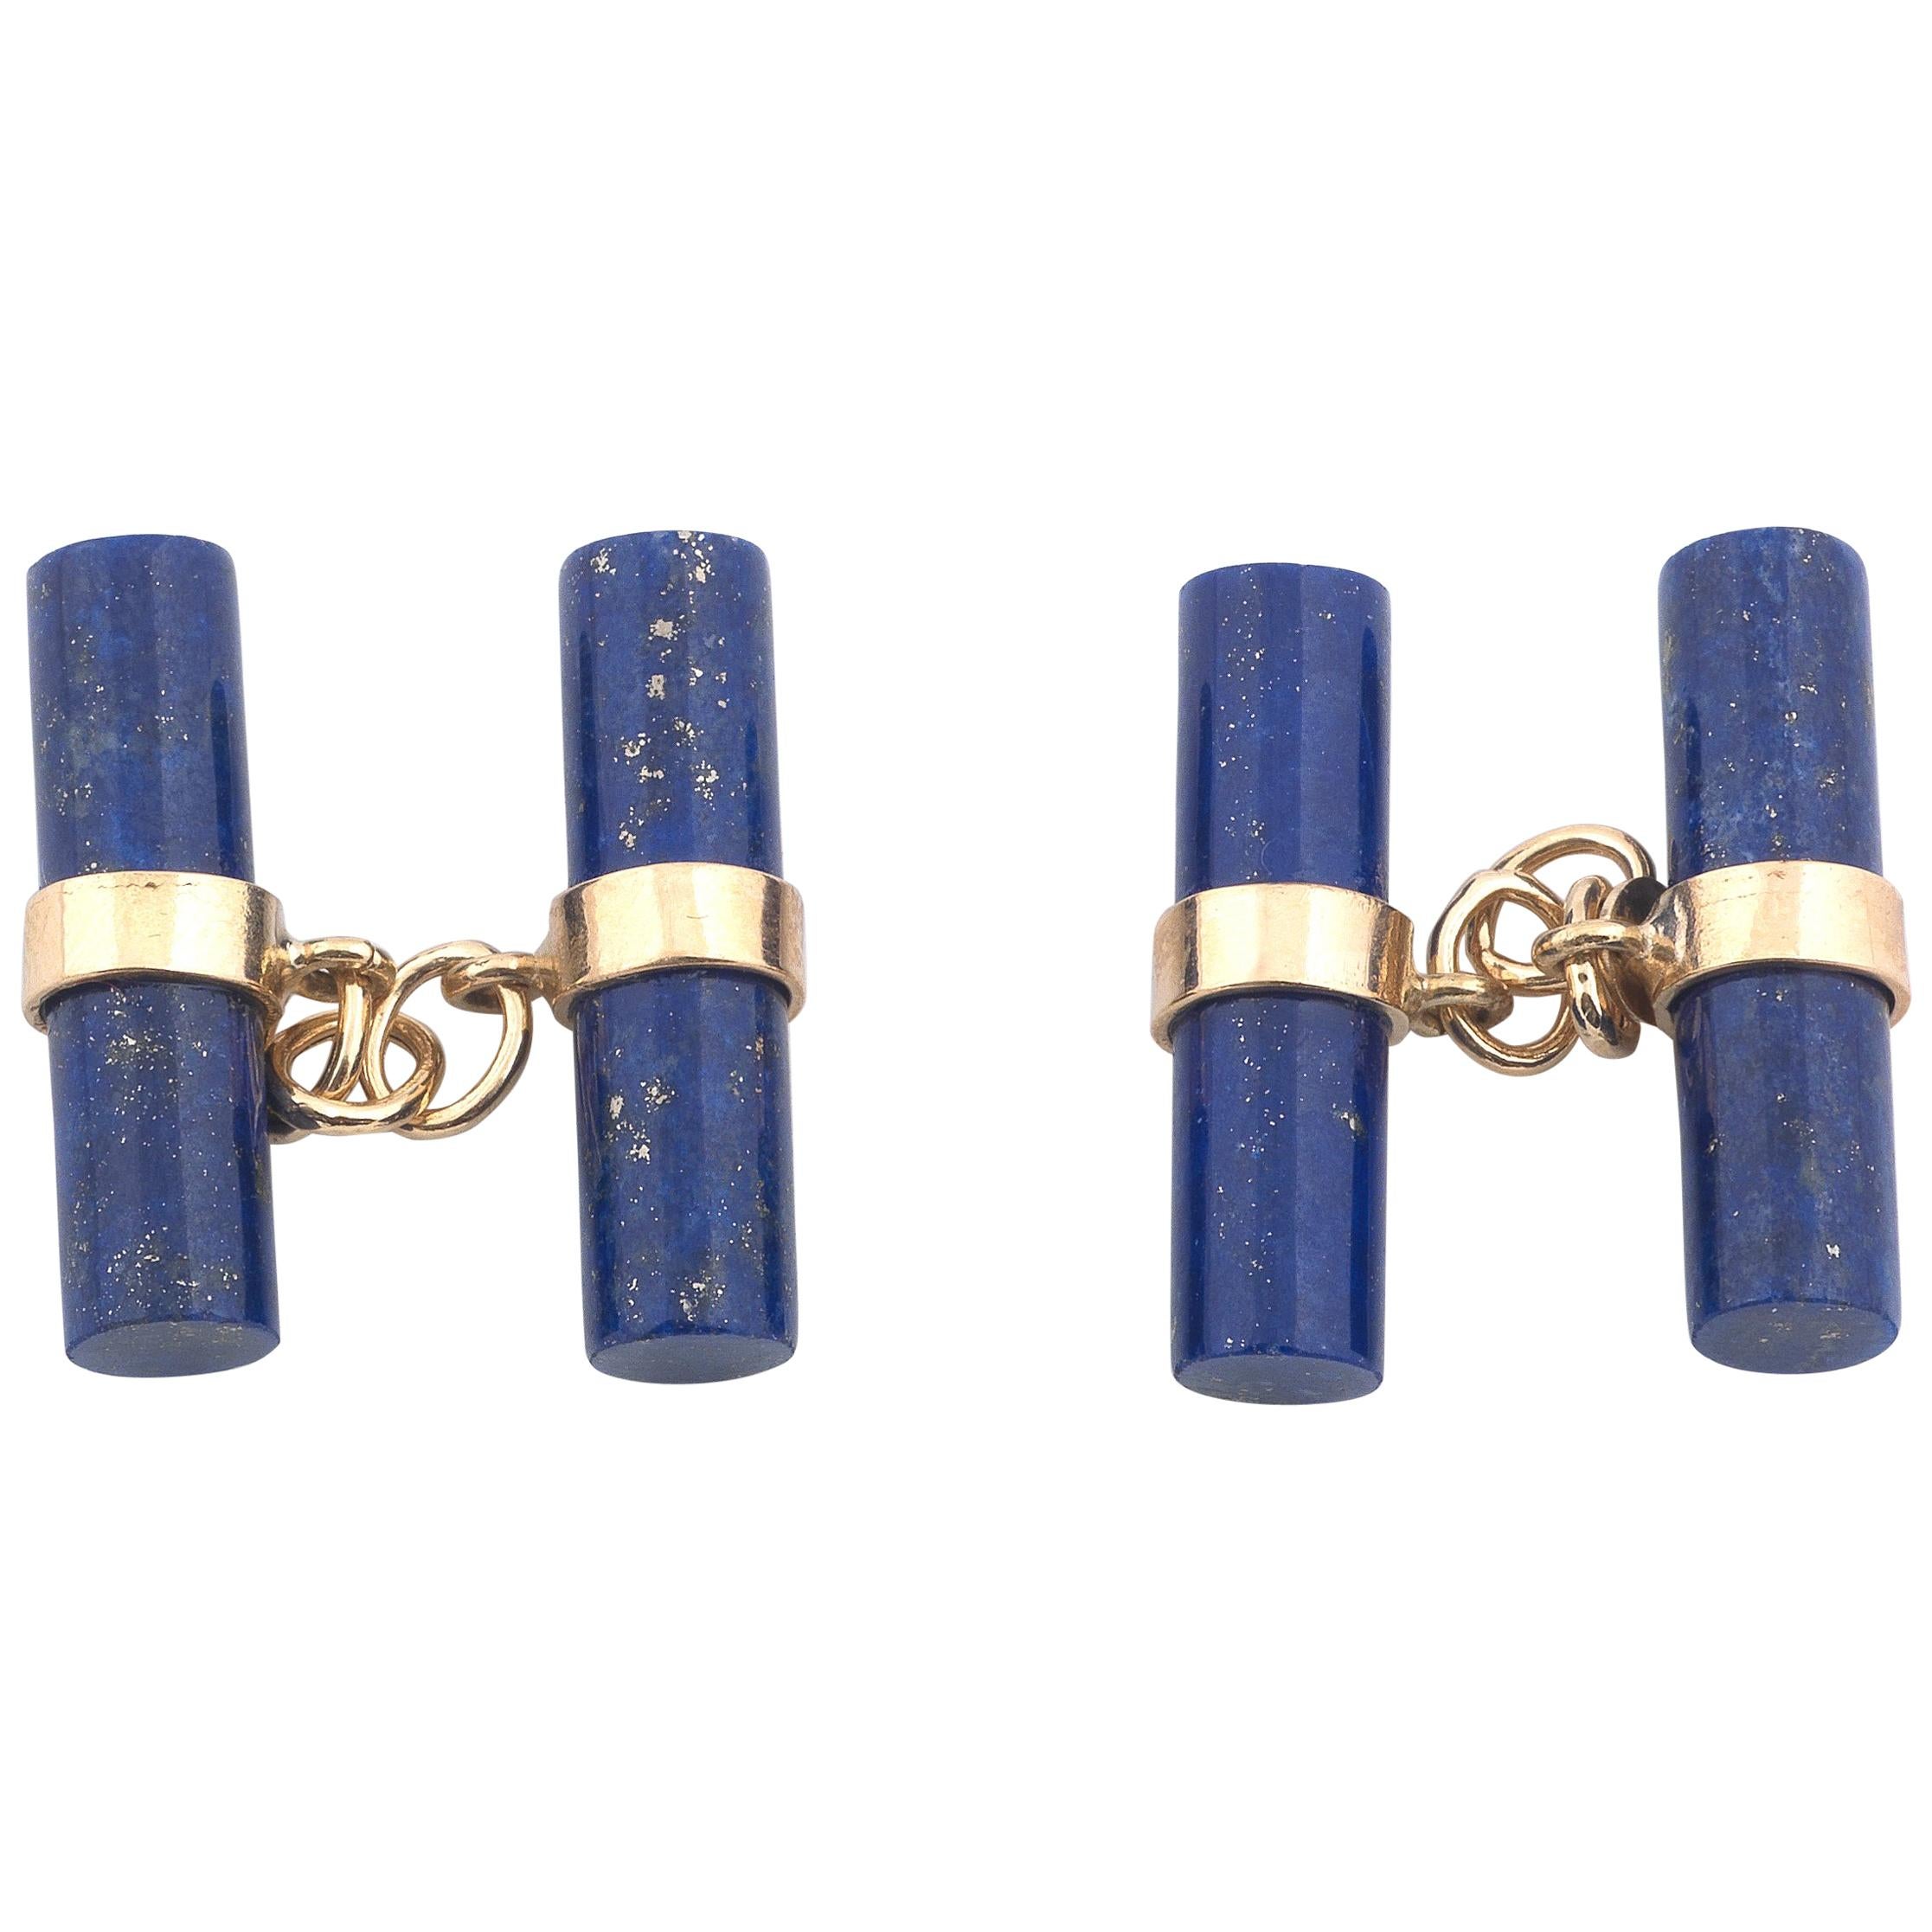 Gold and Lapis Lazuli Cufflinks